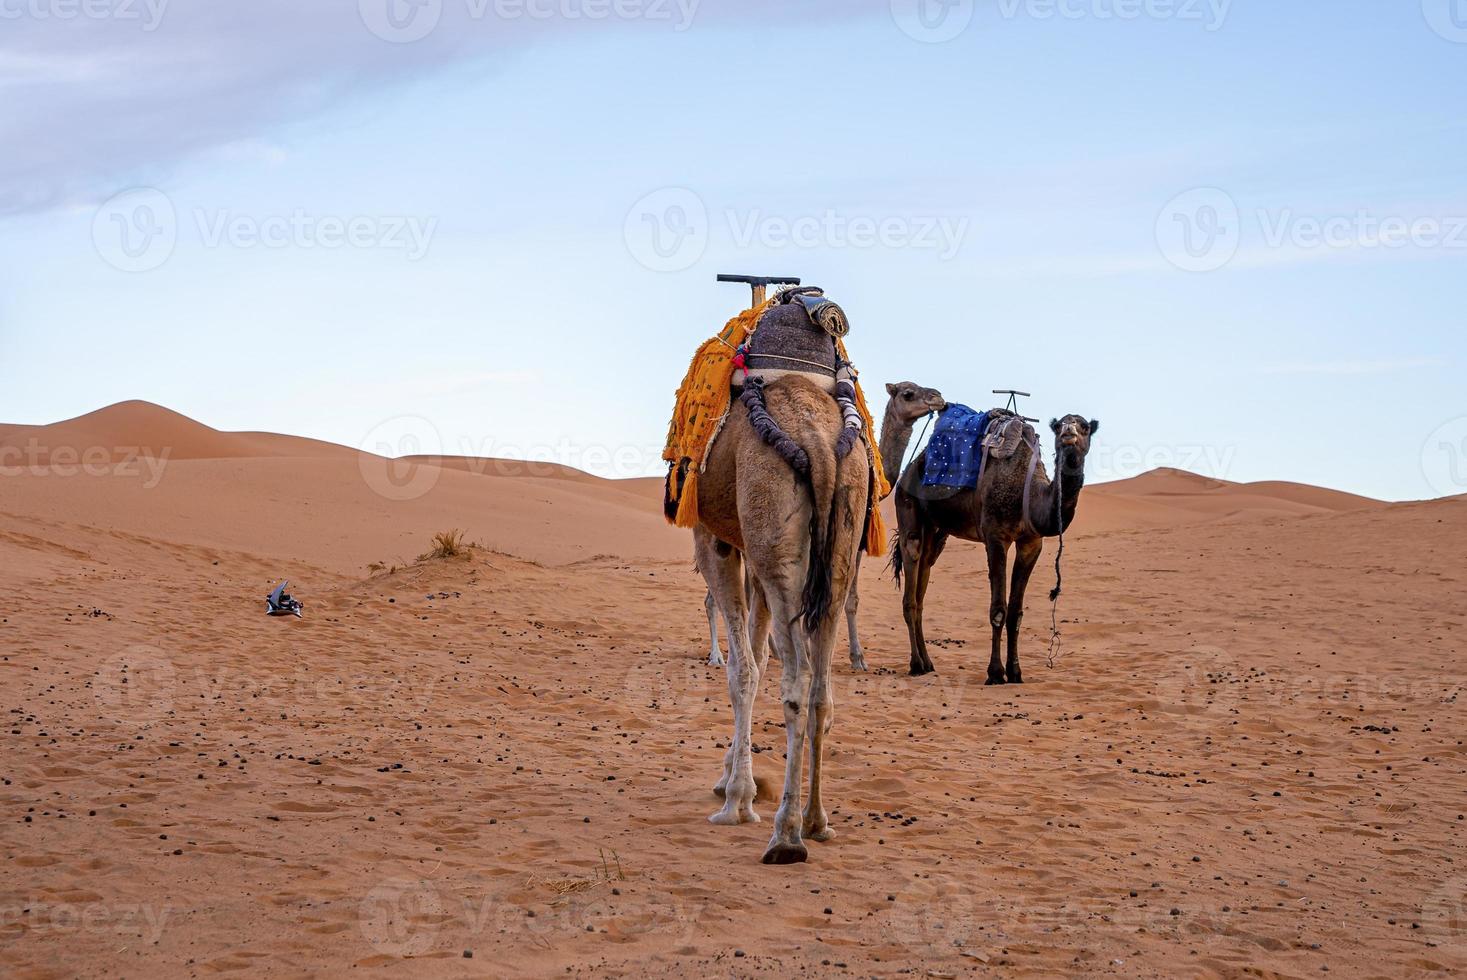 Dromedary camels standing on sand dunes in desert against blue sky photo